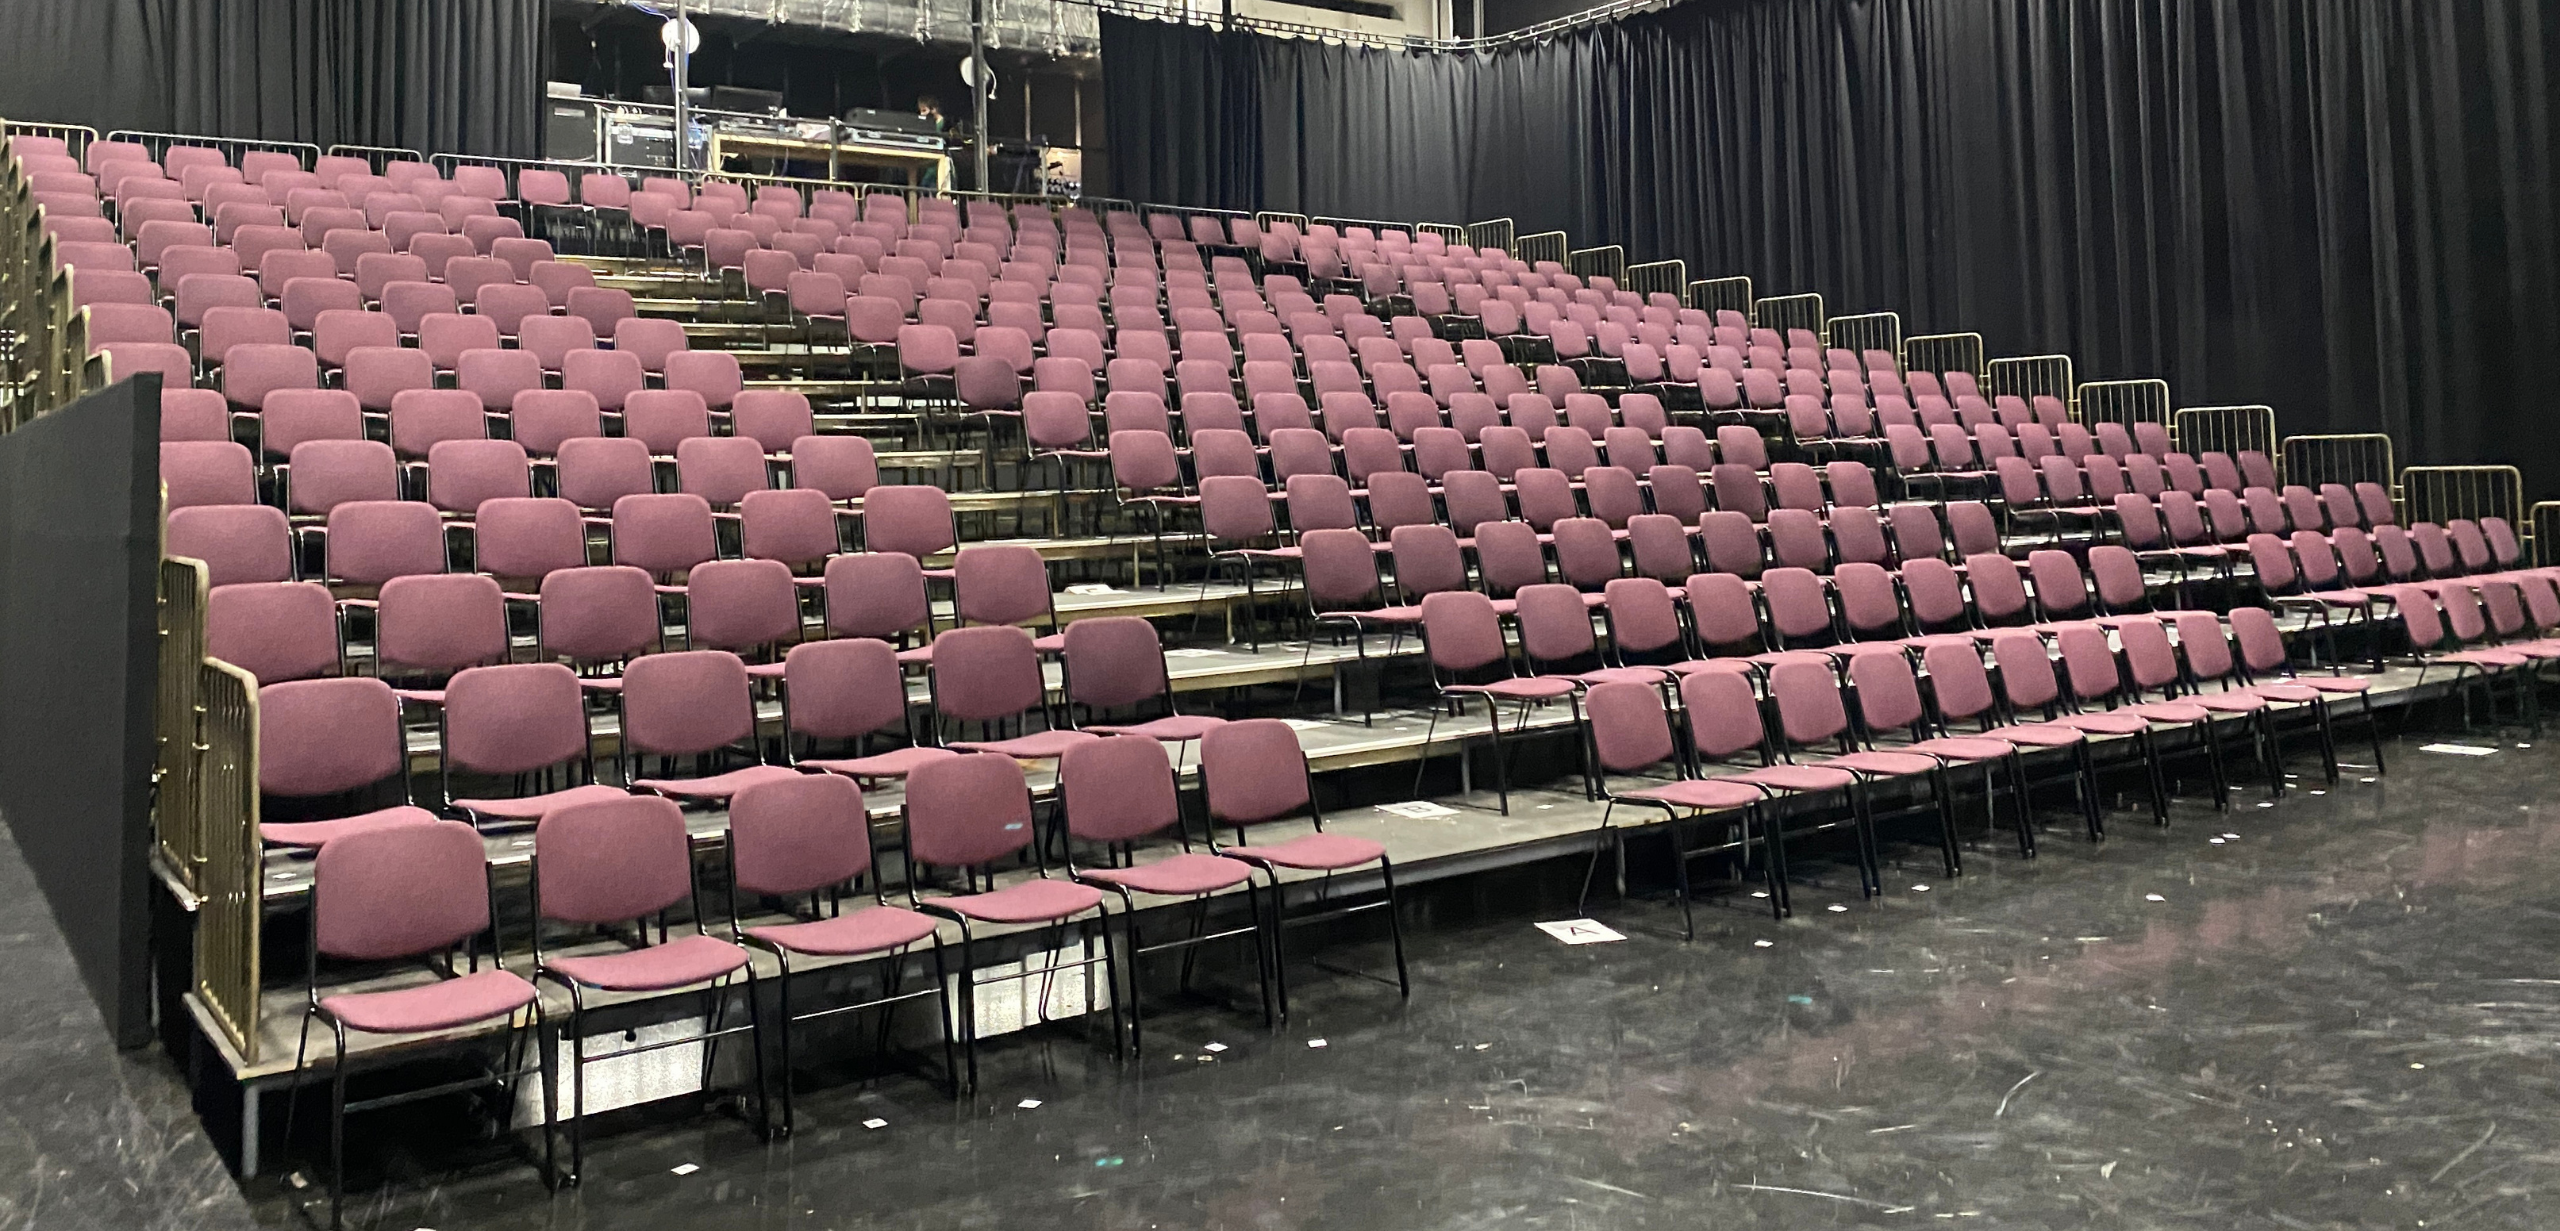 A large auditorium with rows of purple auditorium seating